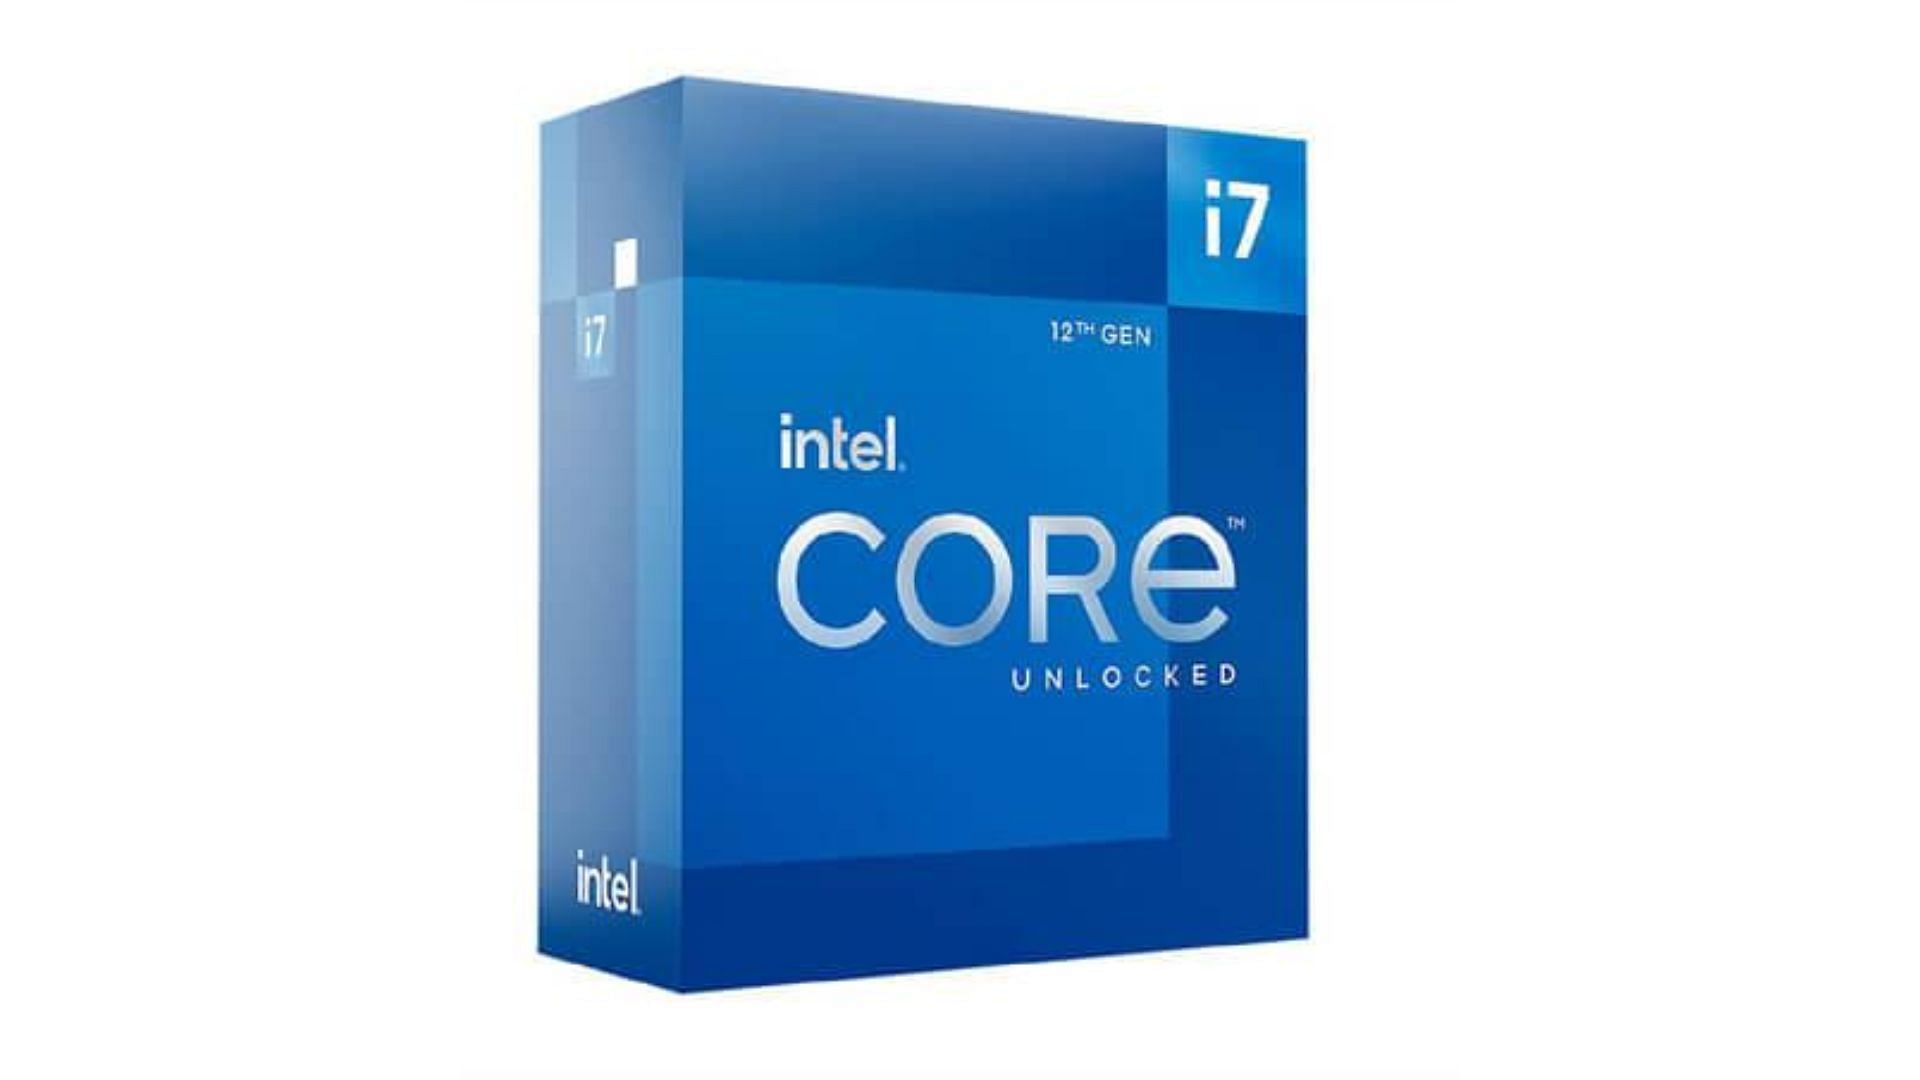 The Intel Core i7 12700K (Image via Intel)